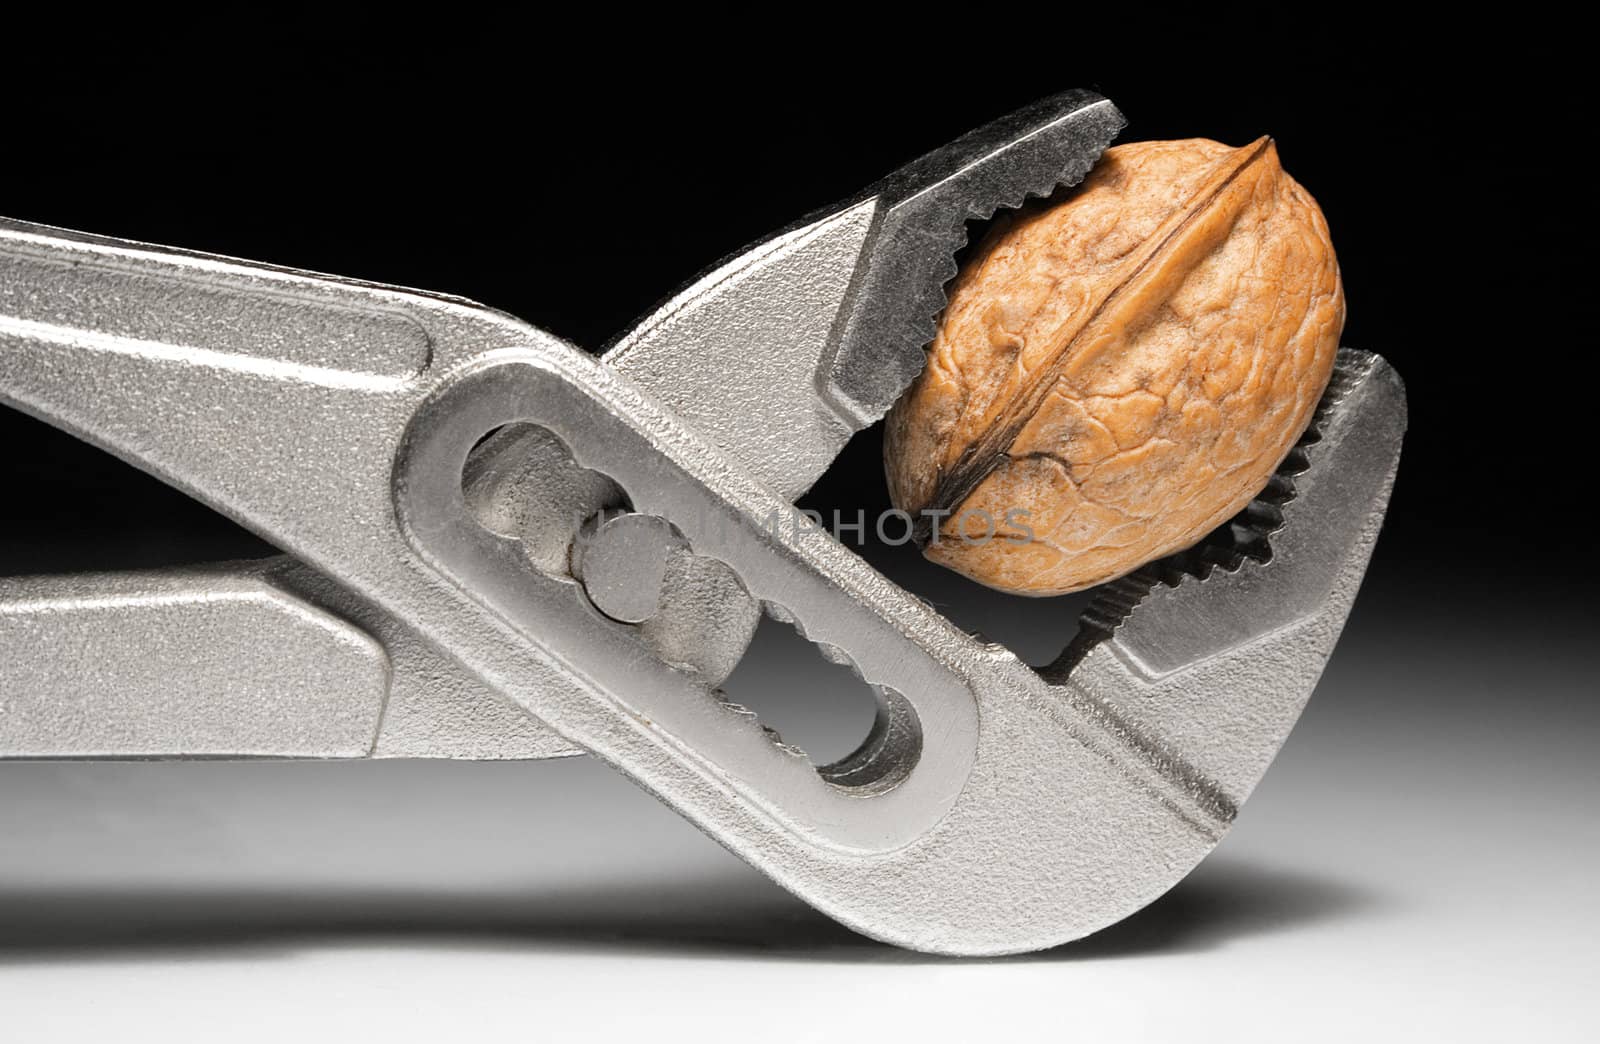 Metal pliers cracking a walnut.